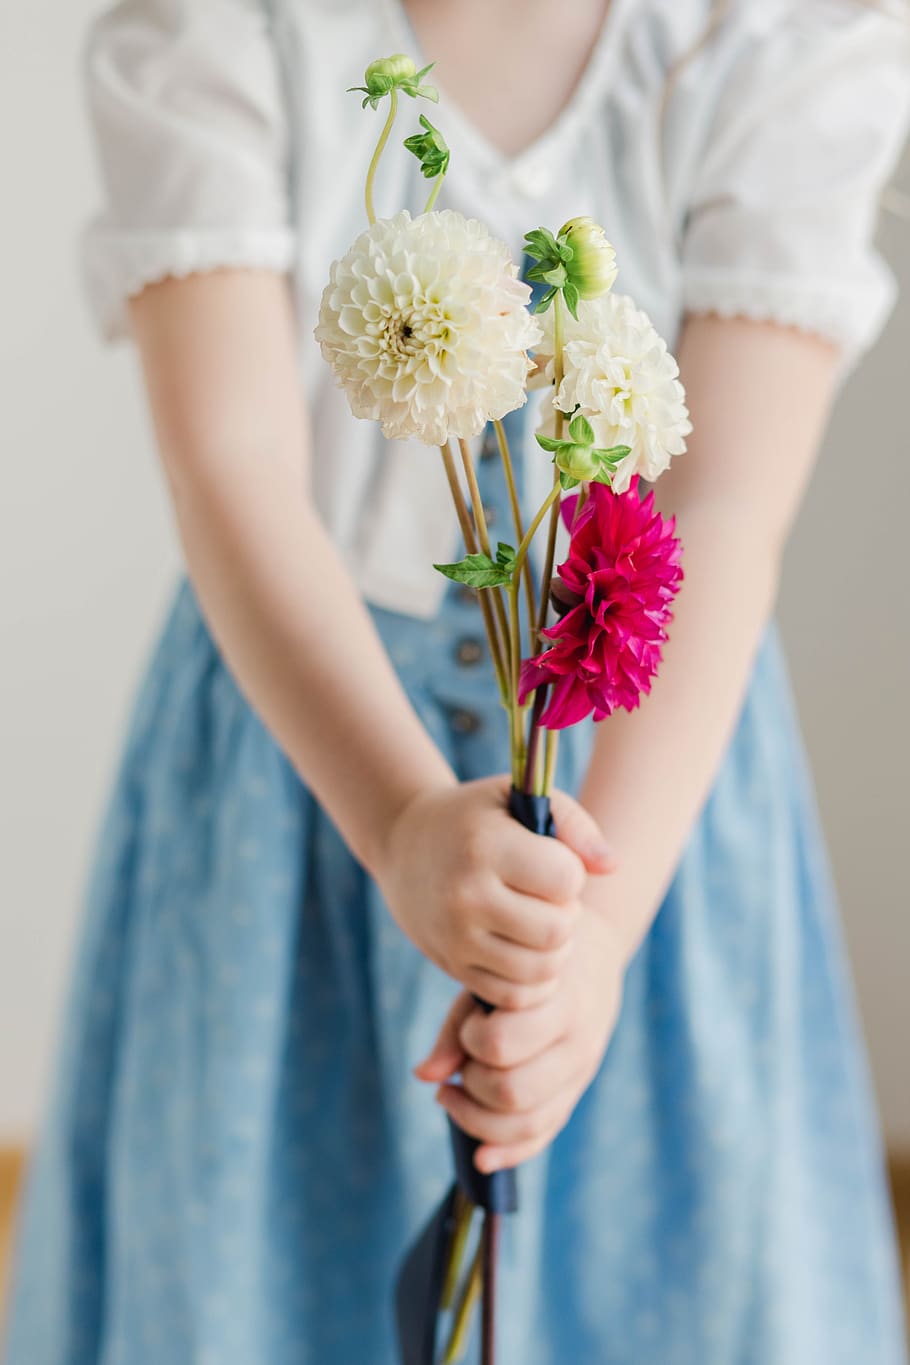 austrian dress, dahlias, girl holding flowers, red, white, child, dirndl, portrait, flower, blue dress